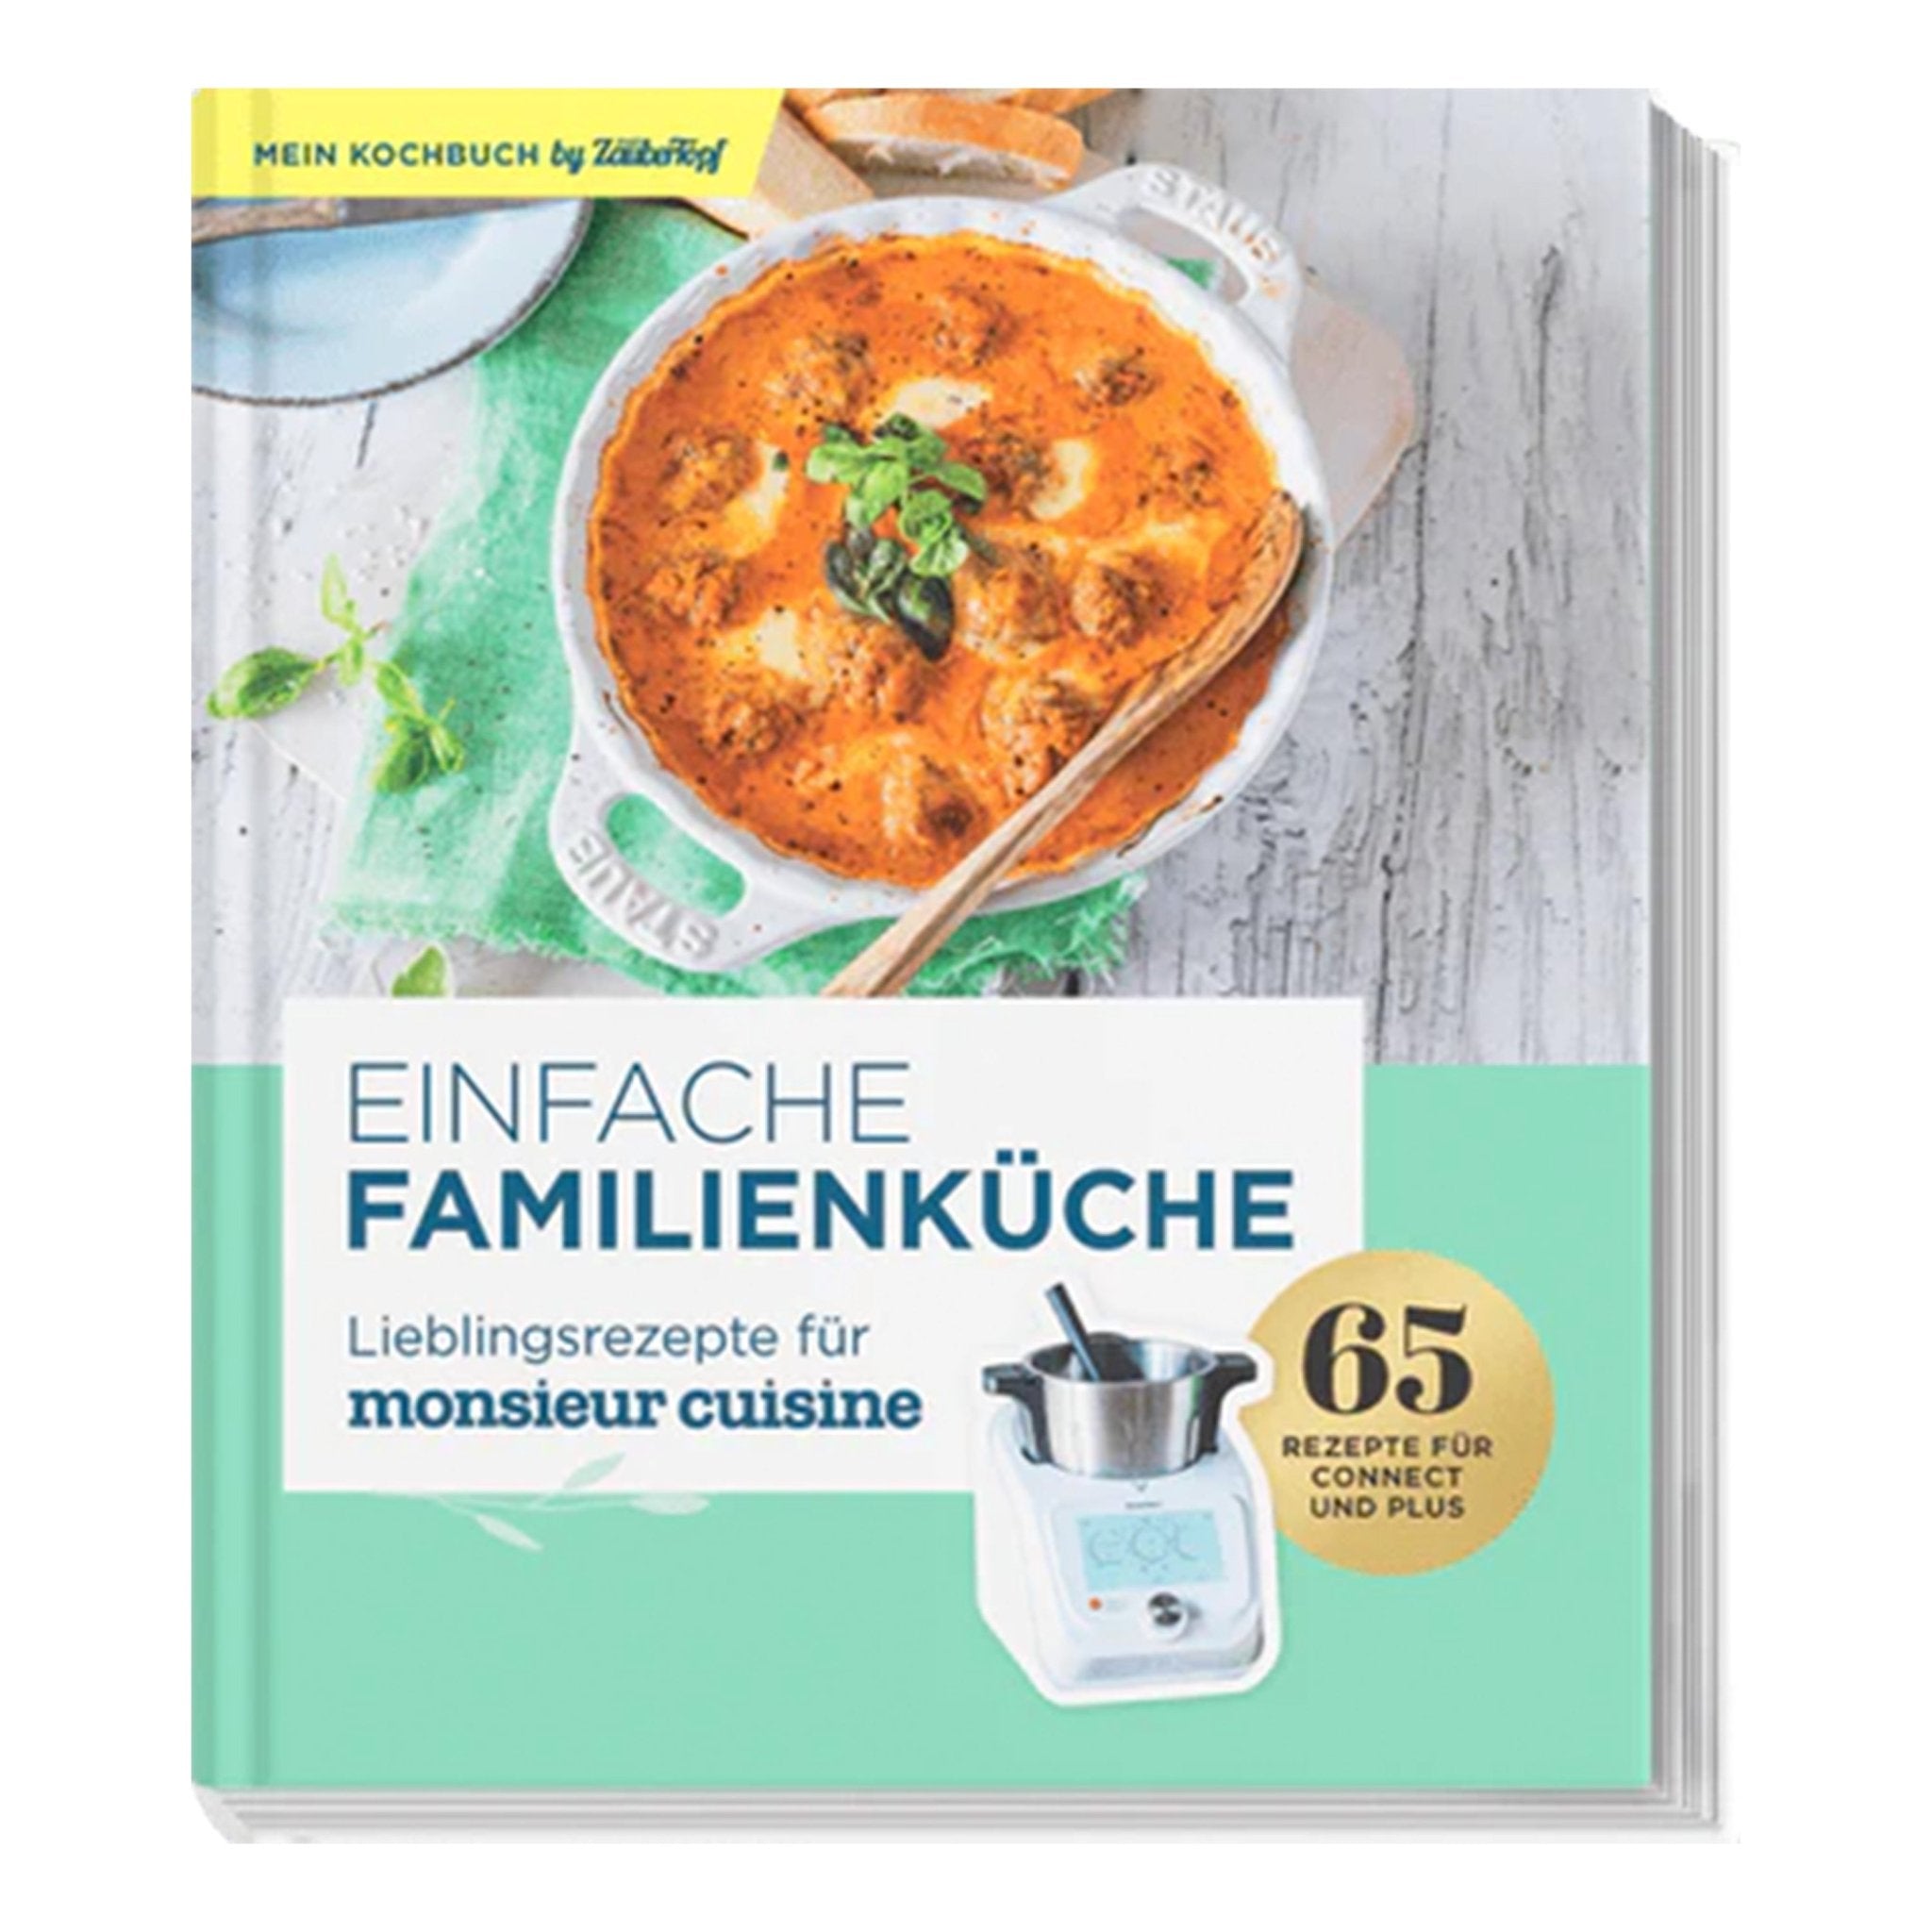 Einfache Familienküche - Lieblingsrezepte für Monsieur Cuisine - Wundermix GmbH